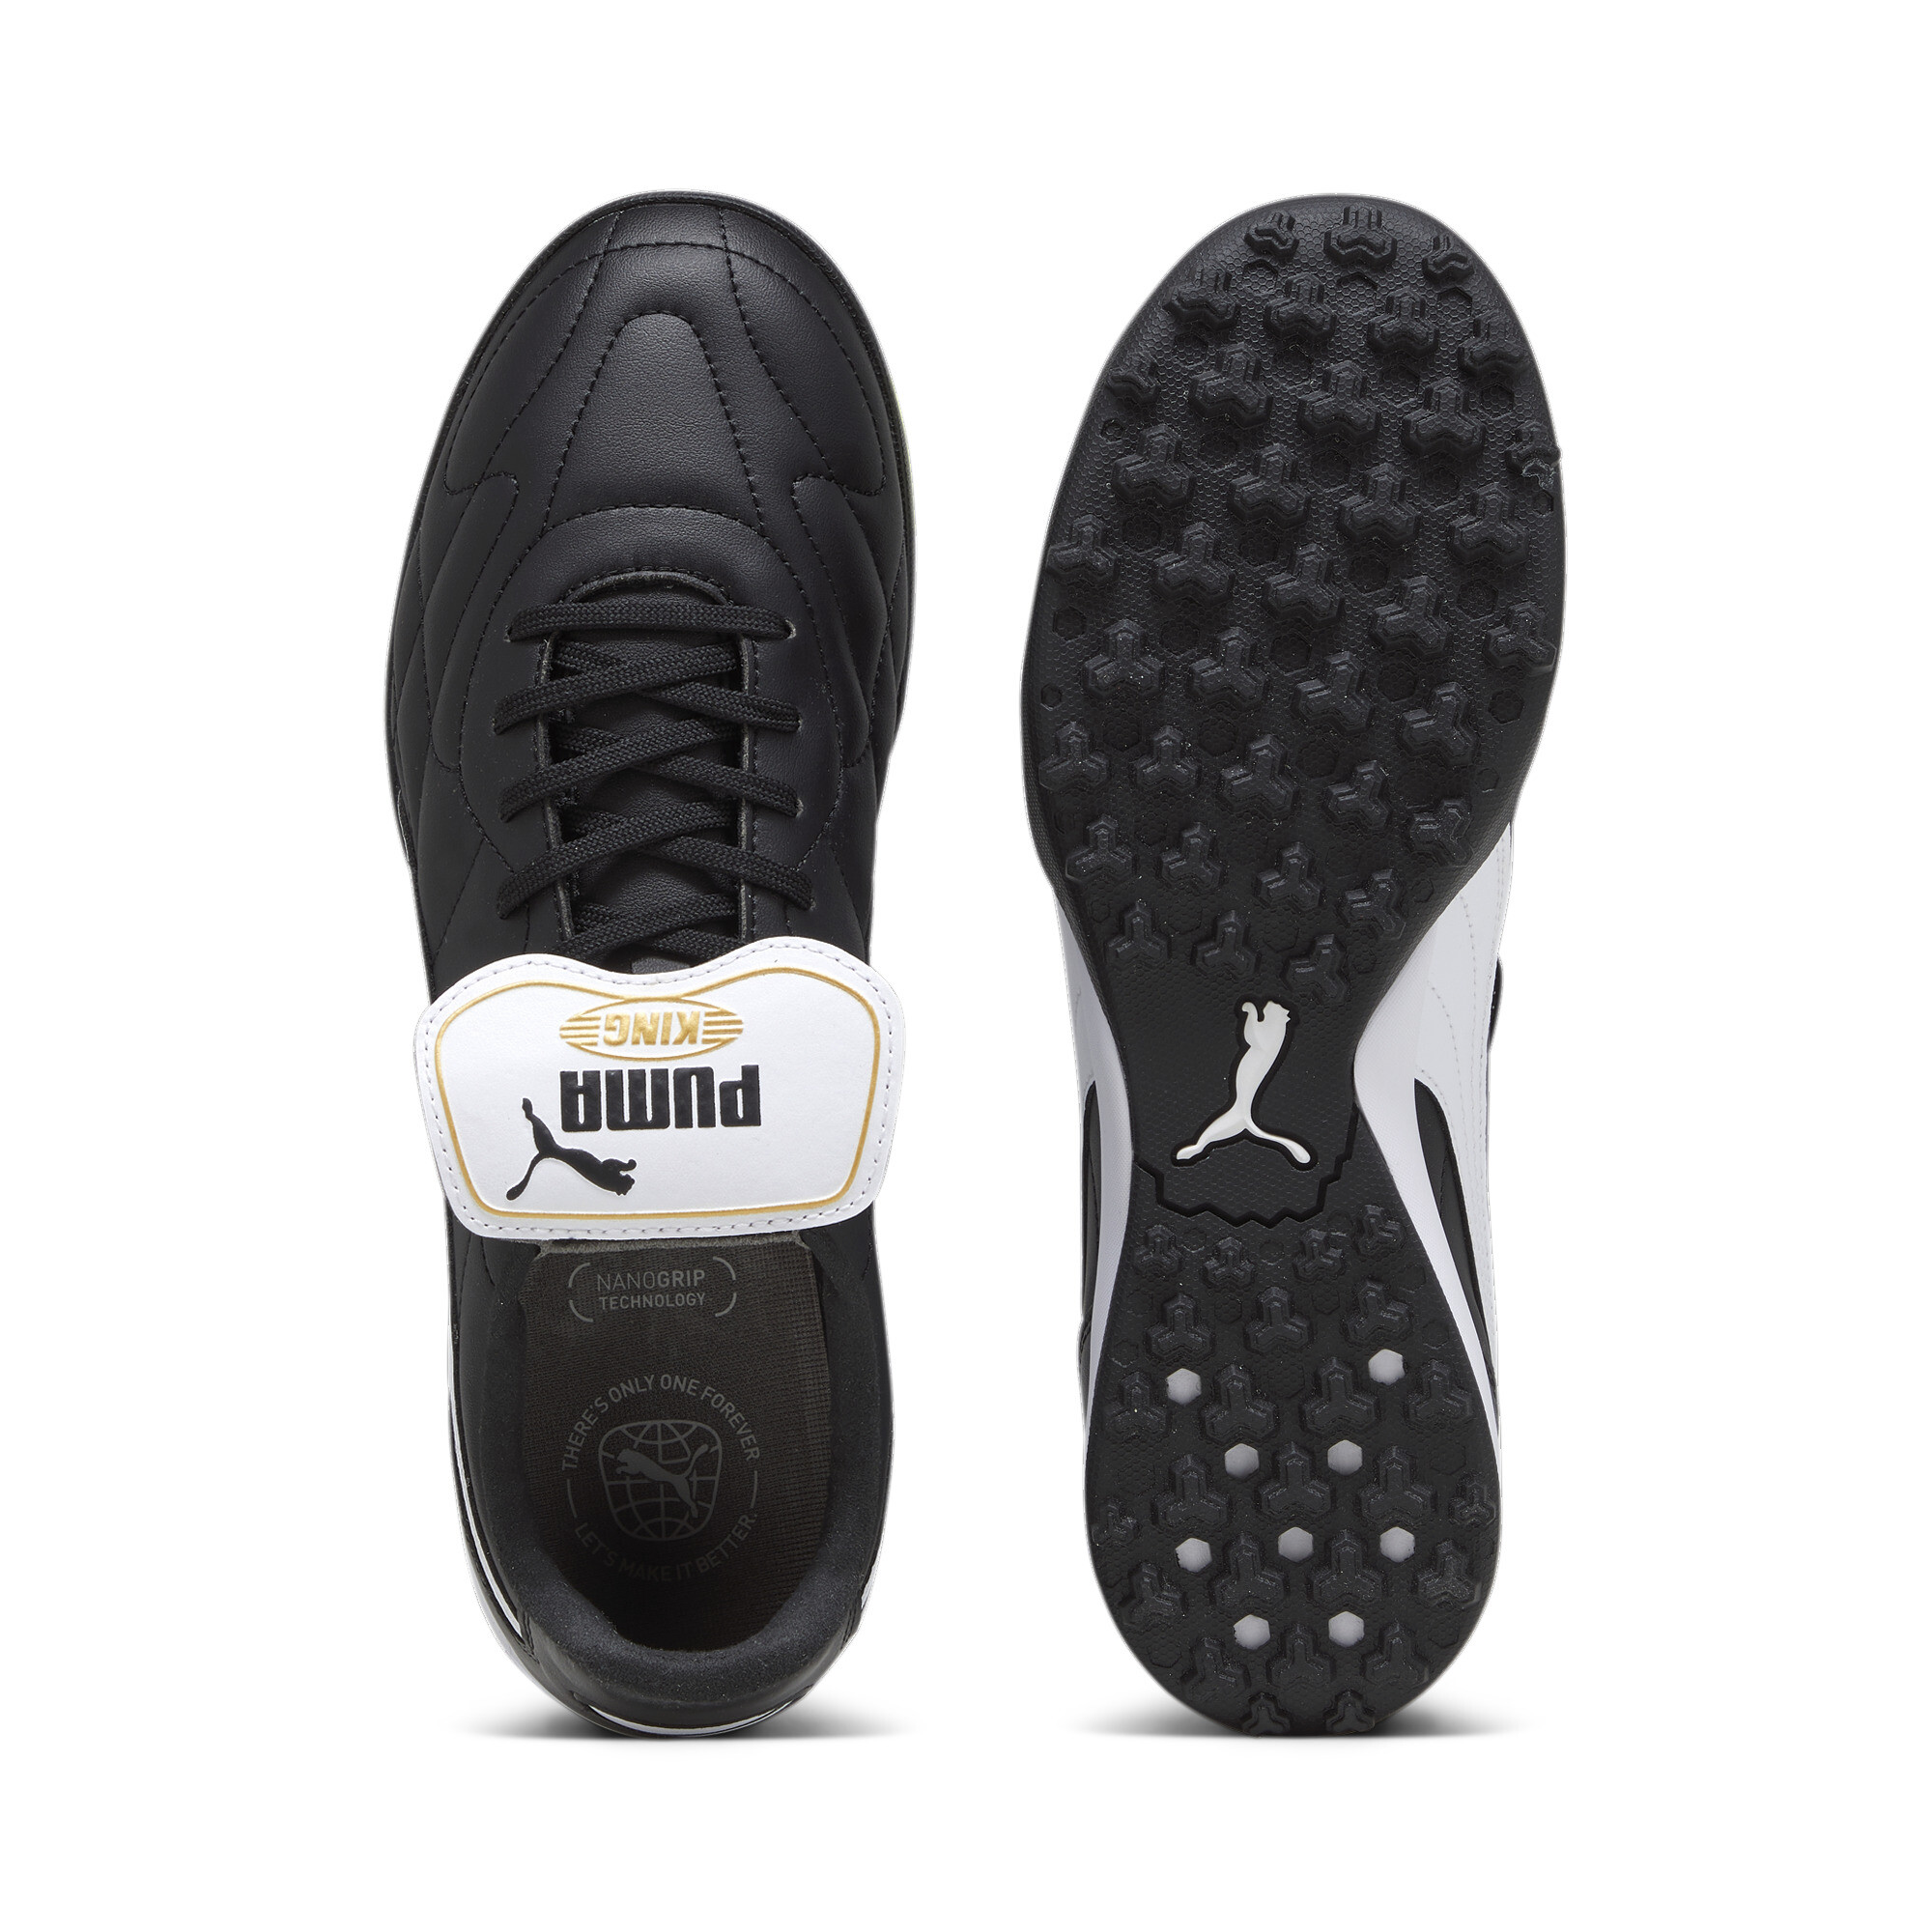 Men's PUMA KING TOP TT Football Boots In Black/Gold, Size EU 46